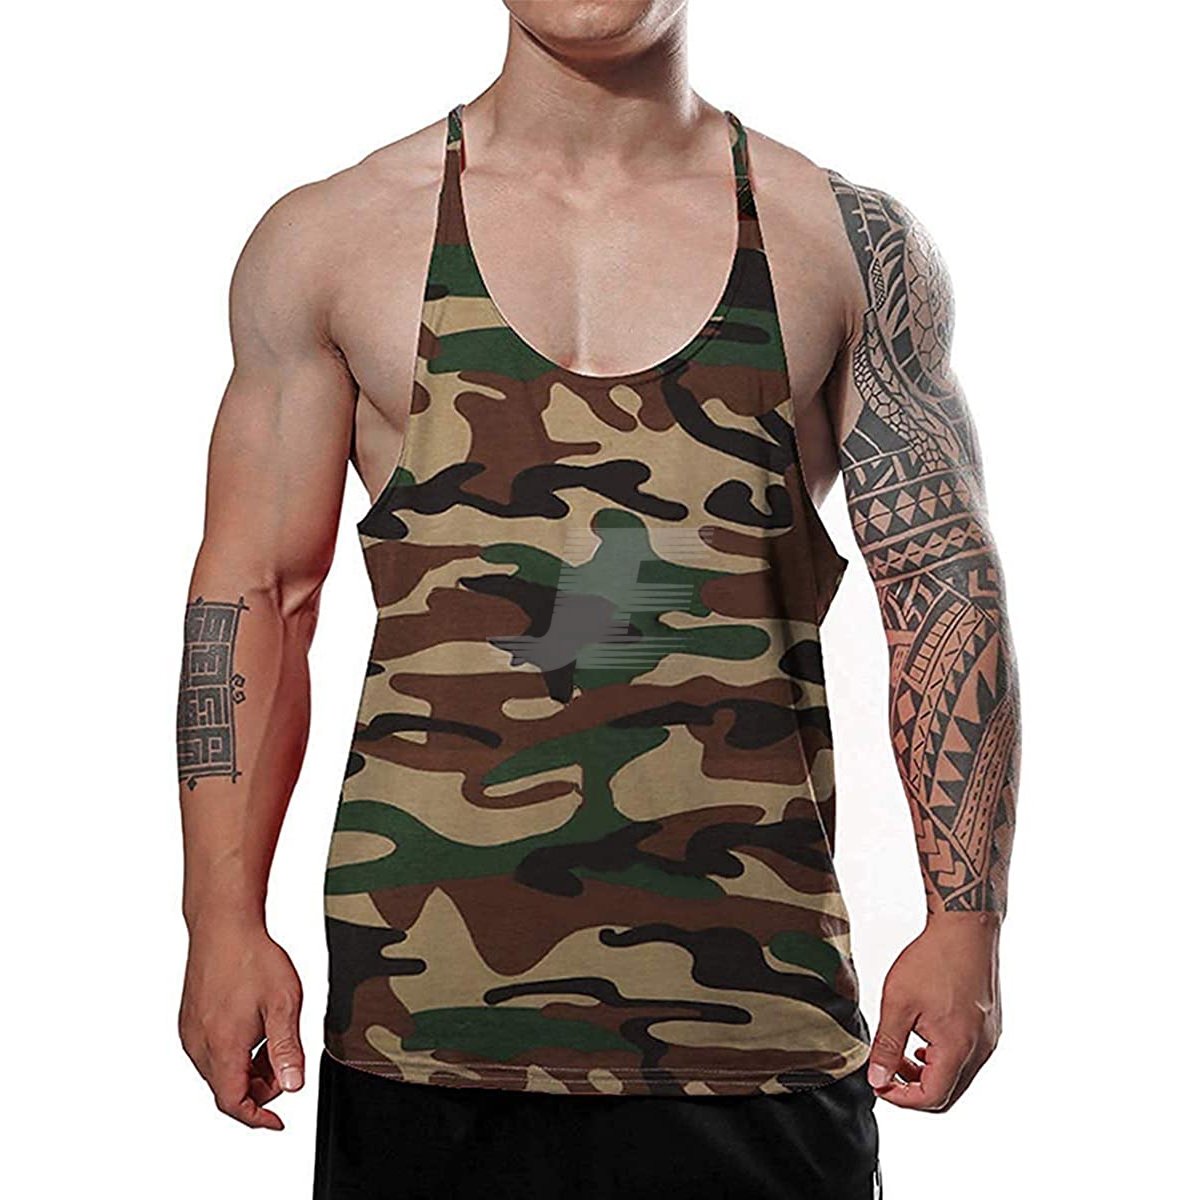 Men’s Gym Wear Cotton Green Camouflage Stringer Tank Top